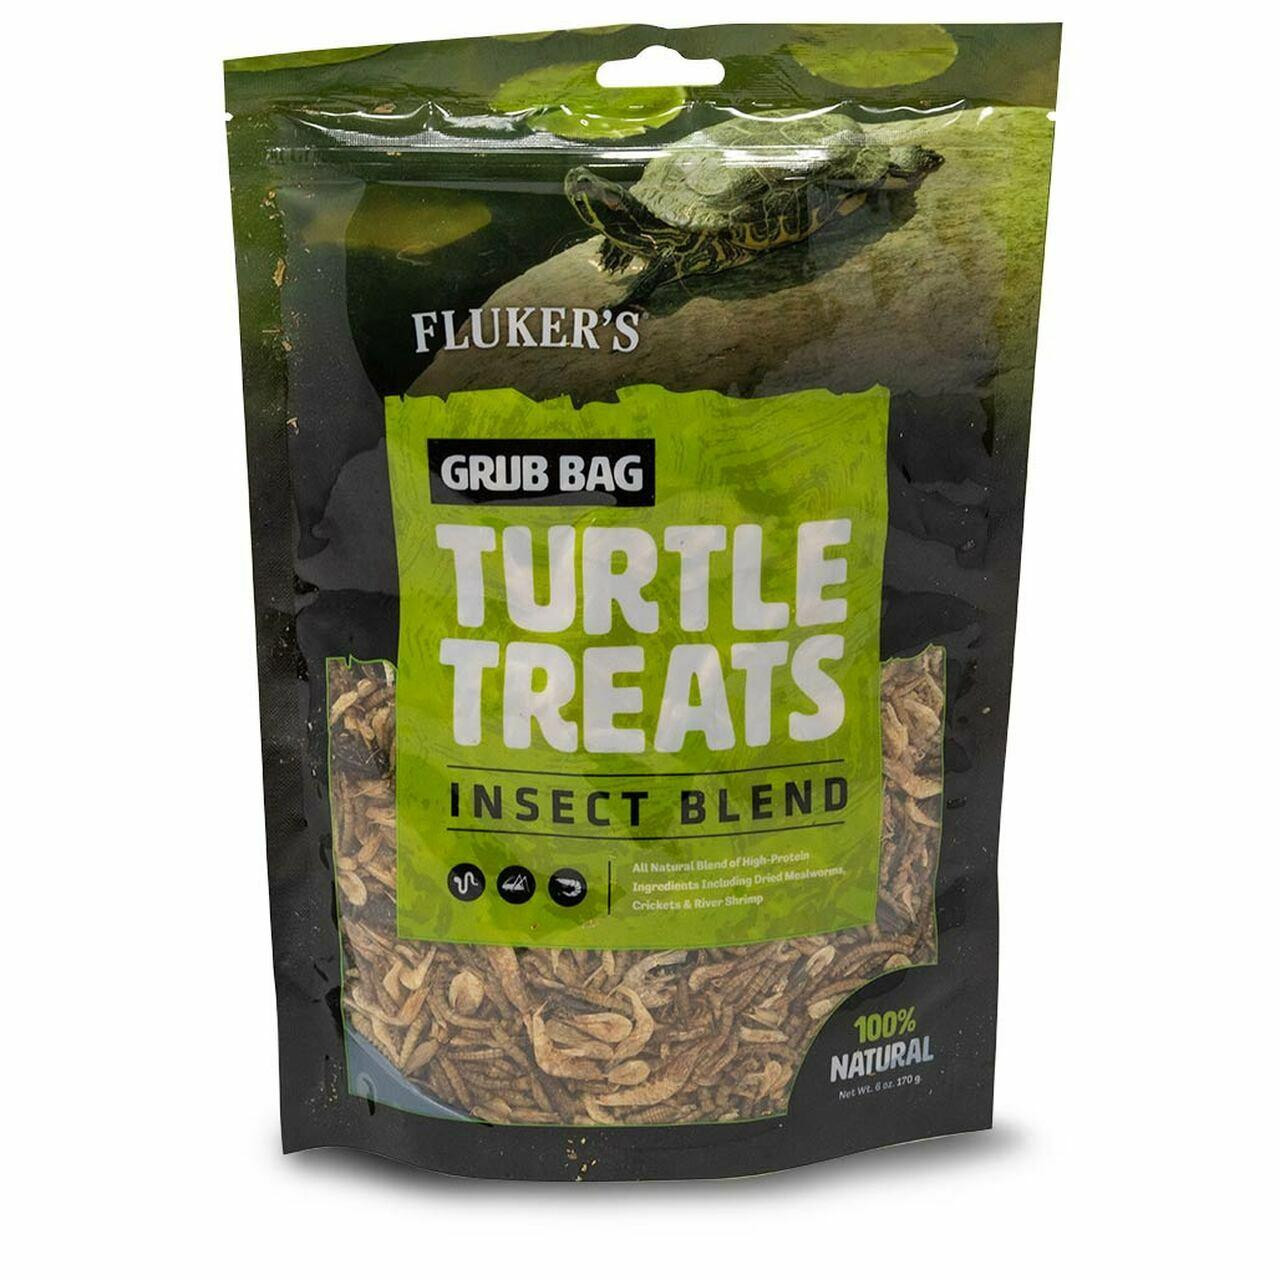 Flukers Flukers Grub Bag Turtle Treats - Insect Blend - 6 oz